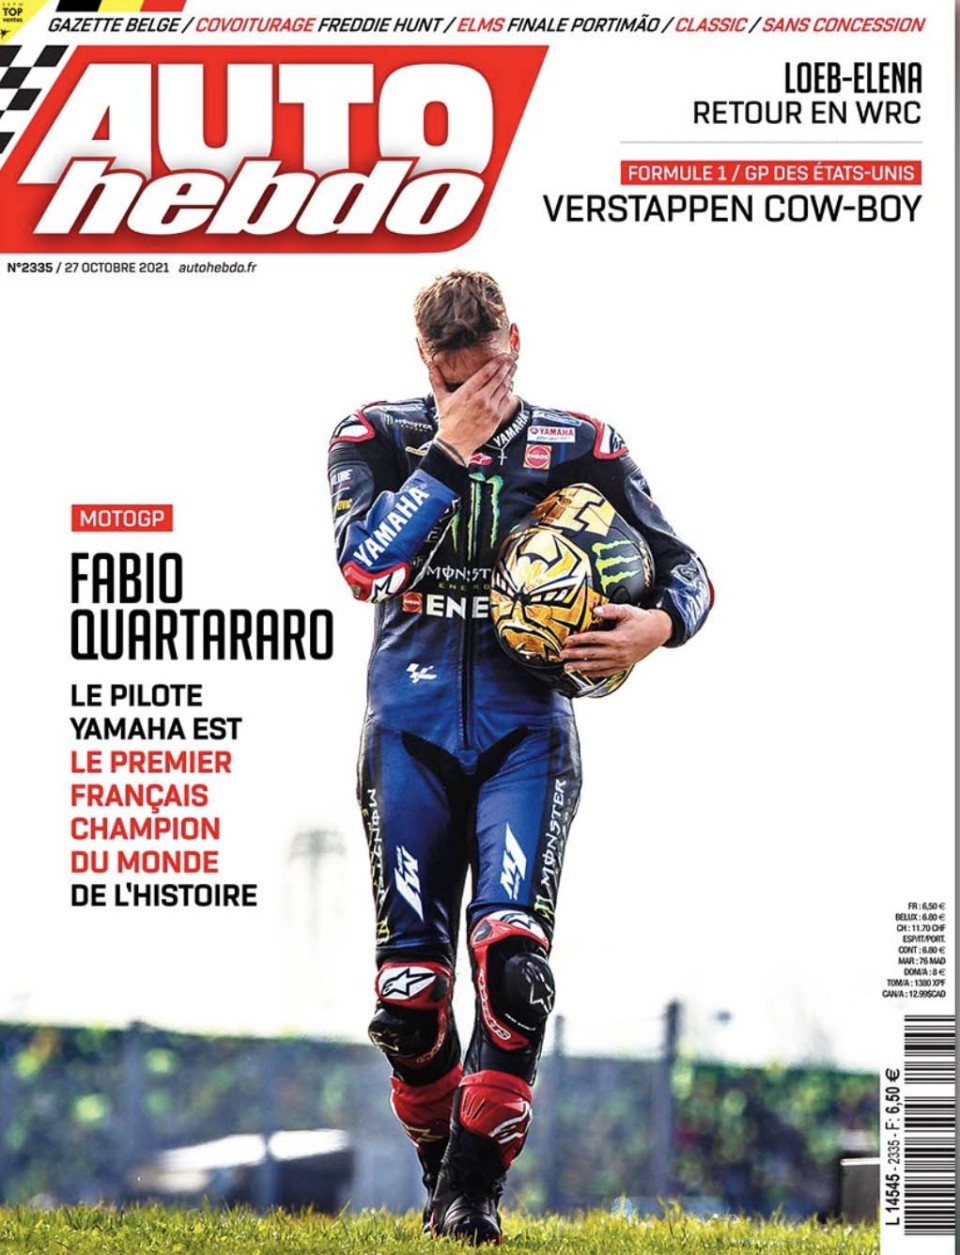 MotoGP: La Francia onora Fabio Quartararo, il campione umile